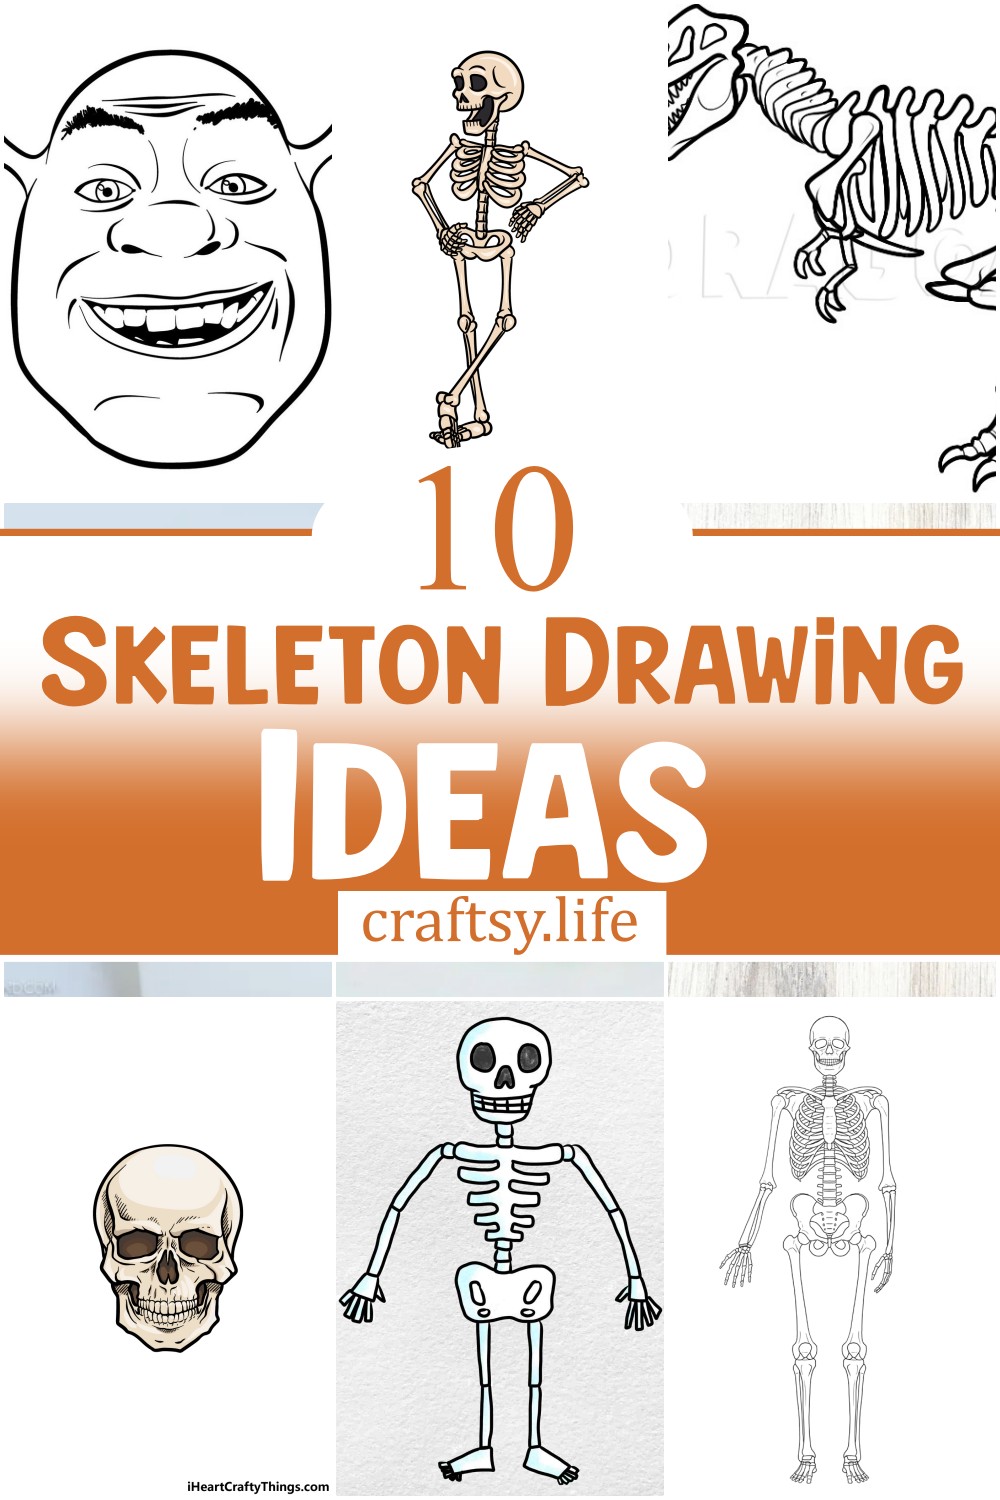 10 Skeleton Drawing Ideas